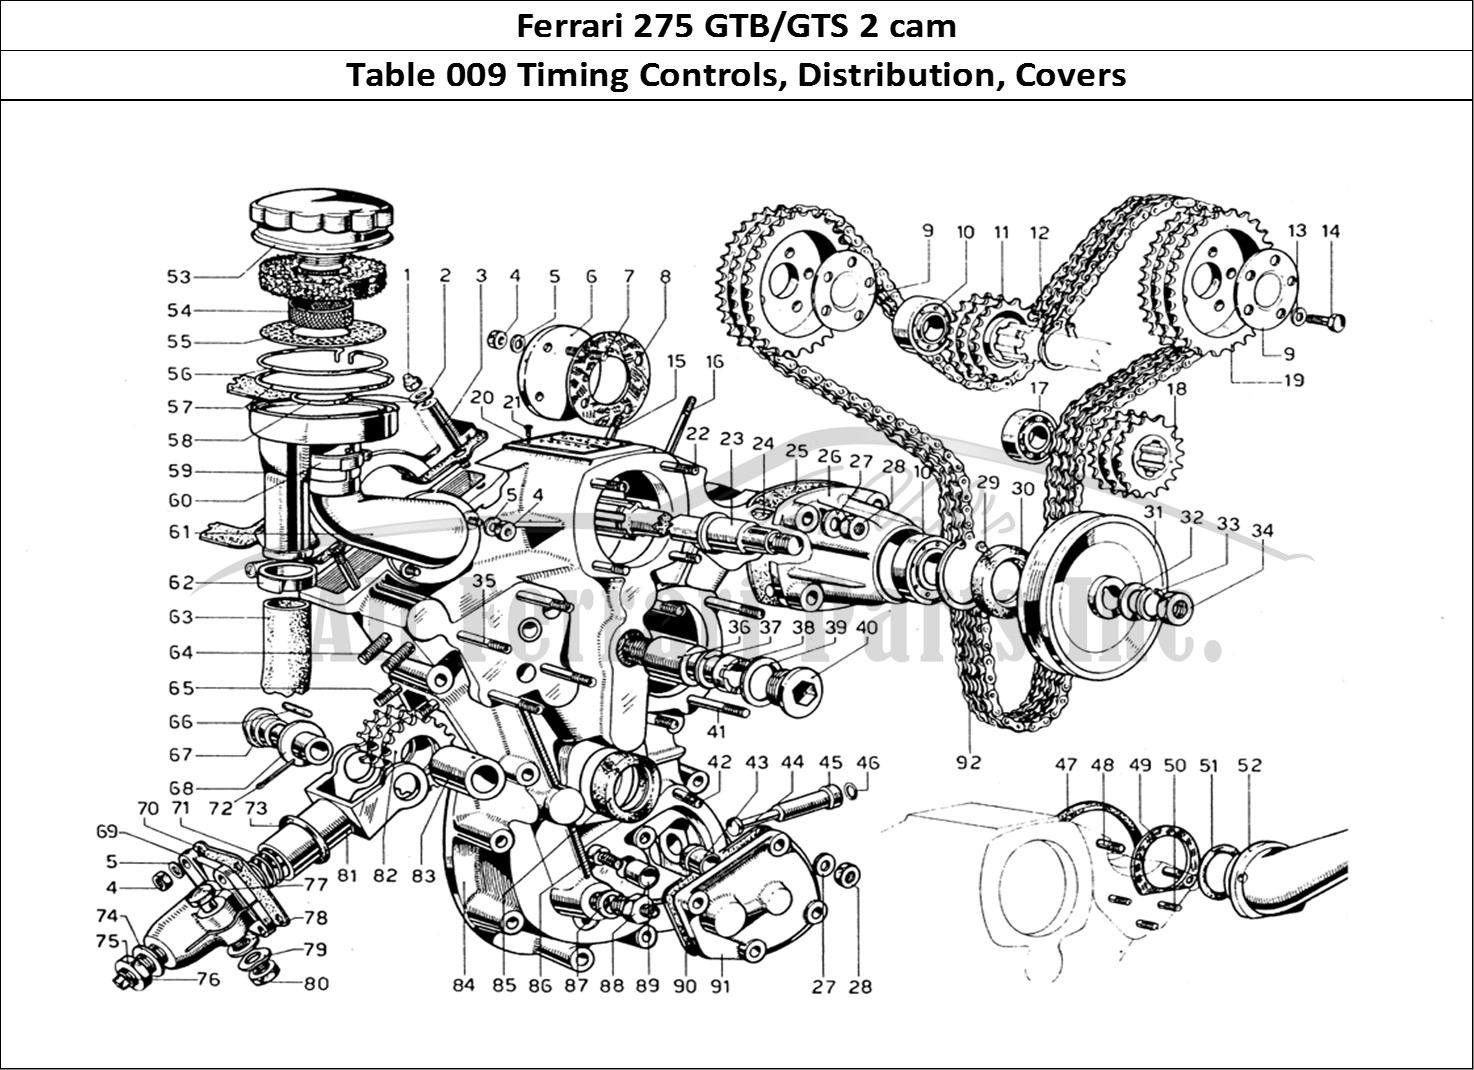 Ferrari Parts Ferrari 275 GTB/GTS 2 cam Page 009 Distribution